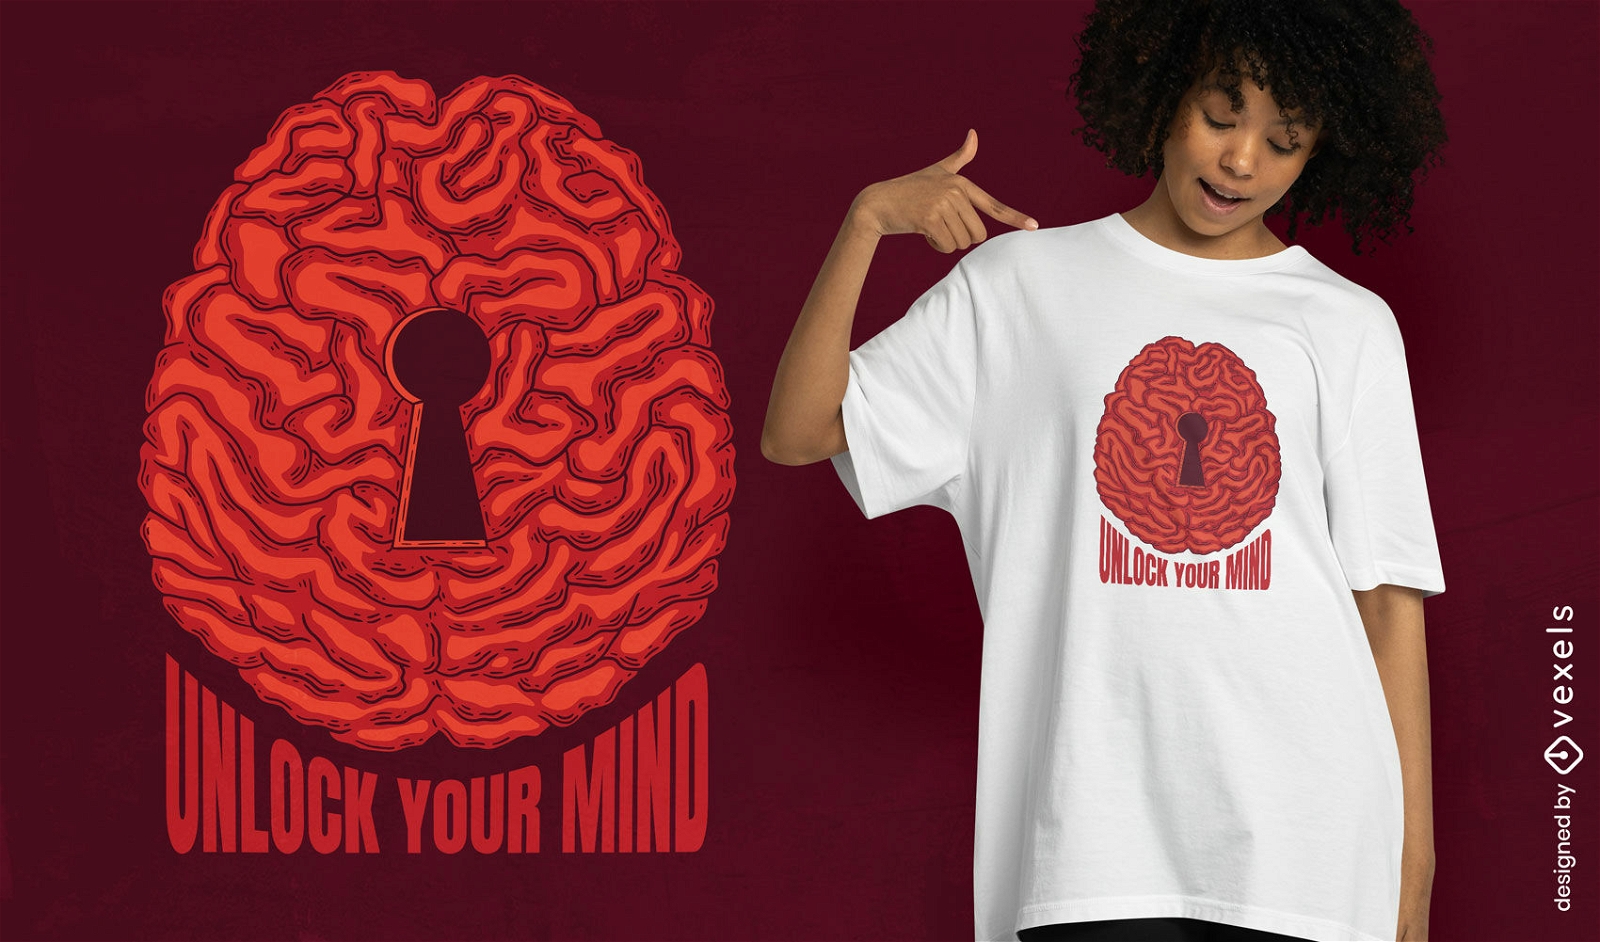 Unlock your mind t-shirt design